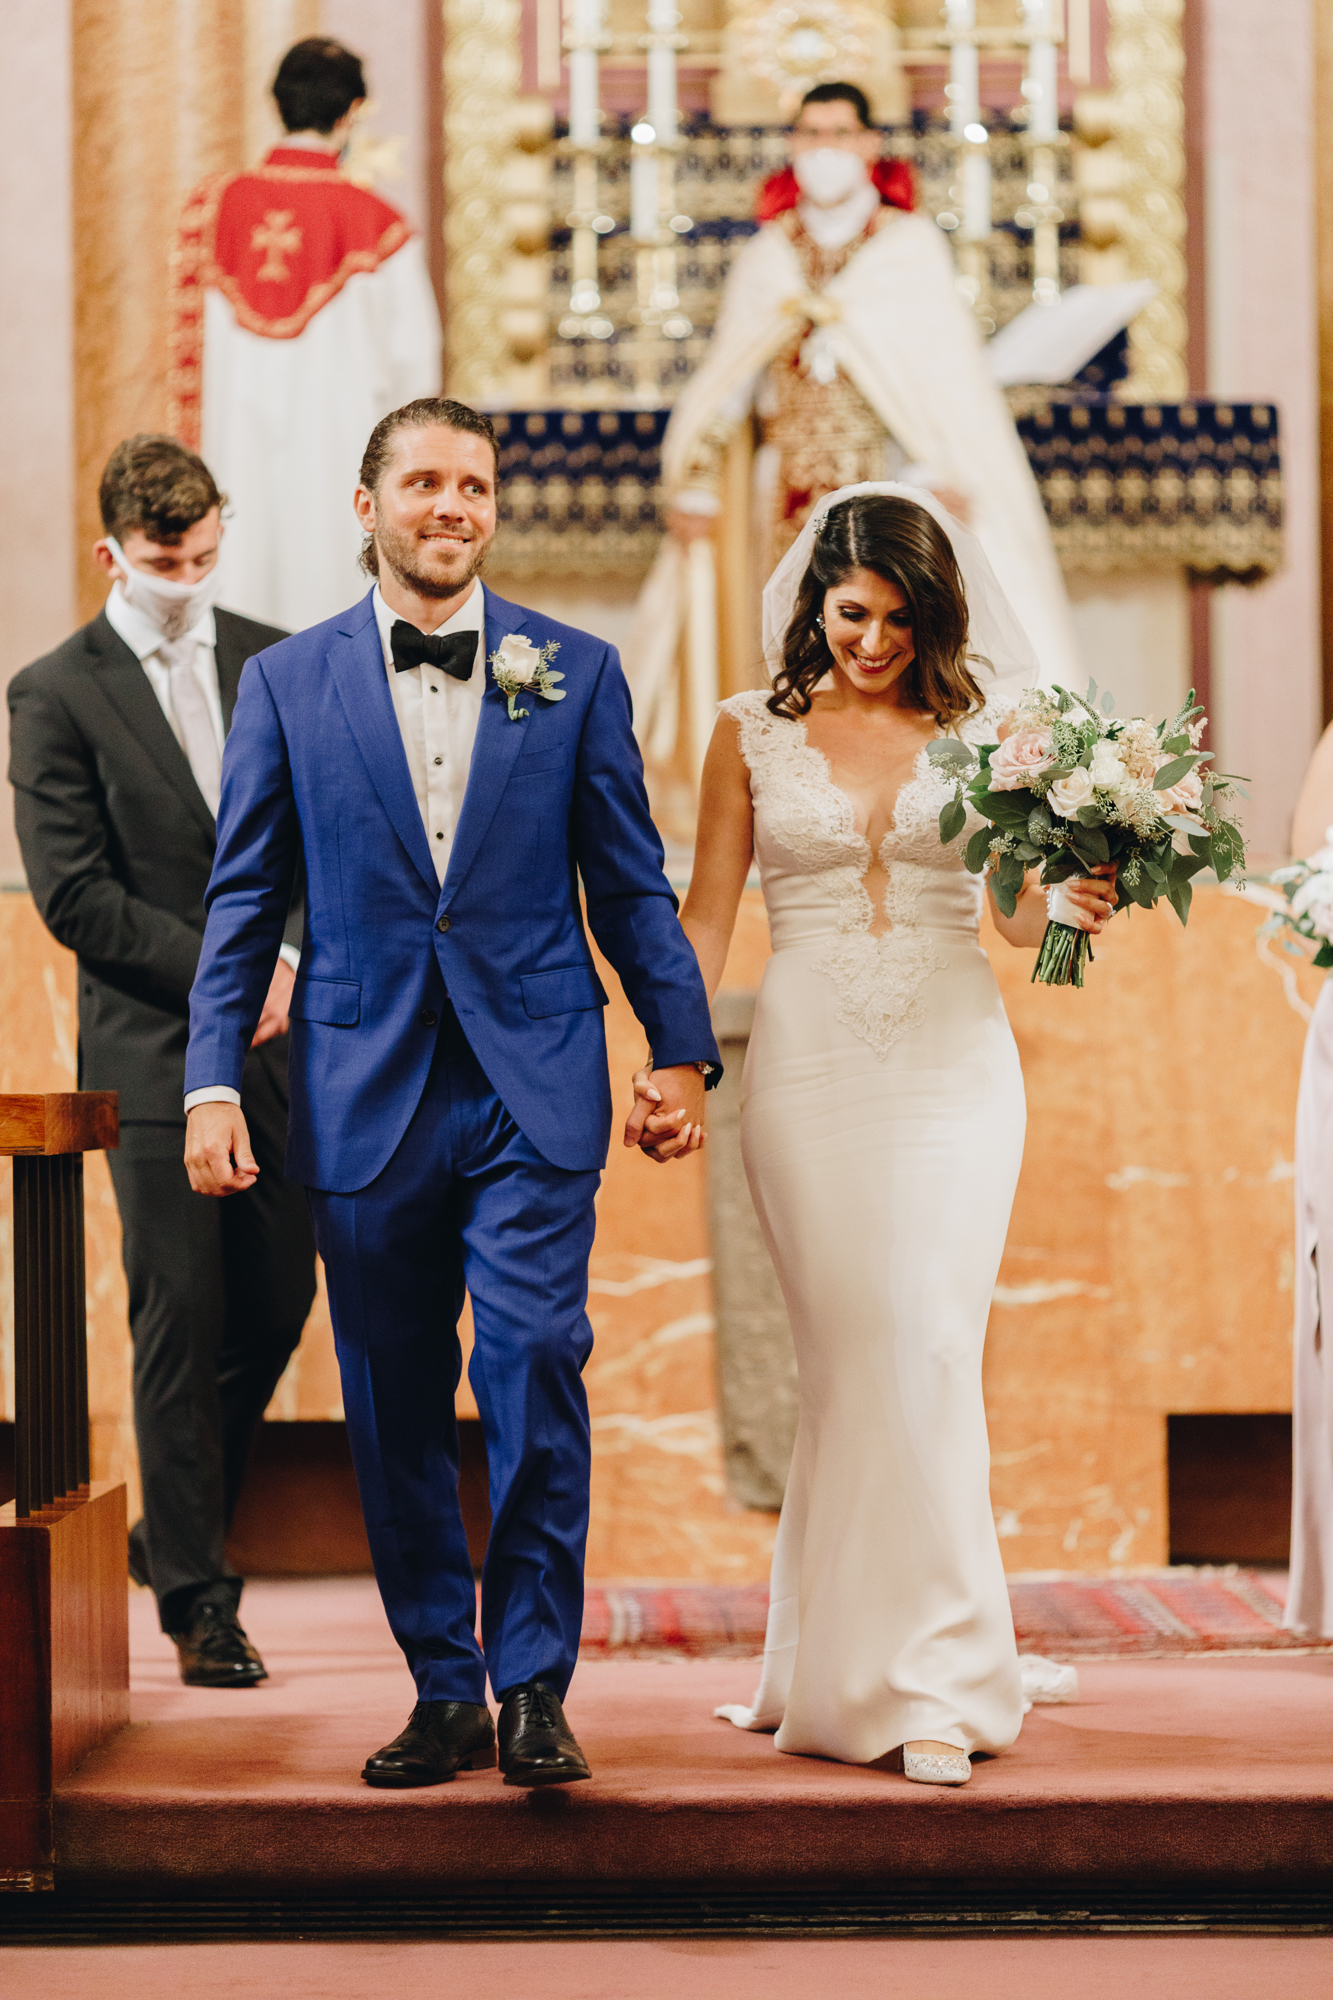 Wedding ceremony photos at Armenian Church in NYC